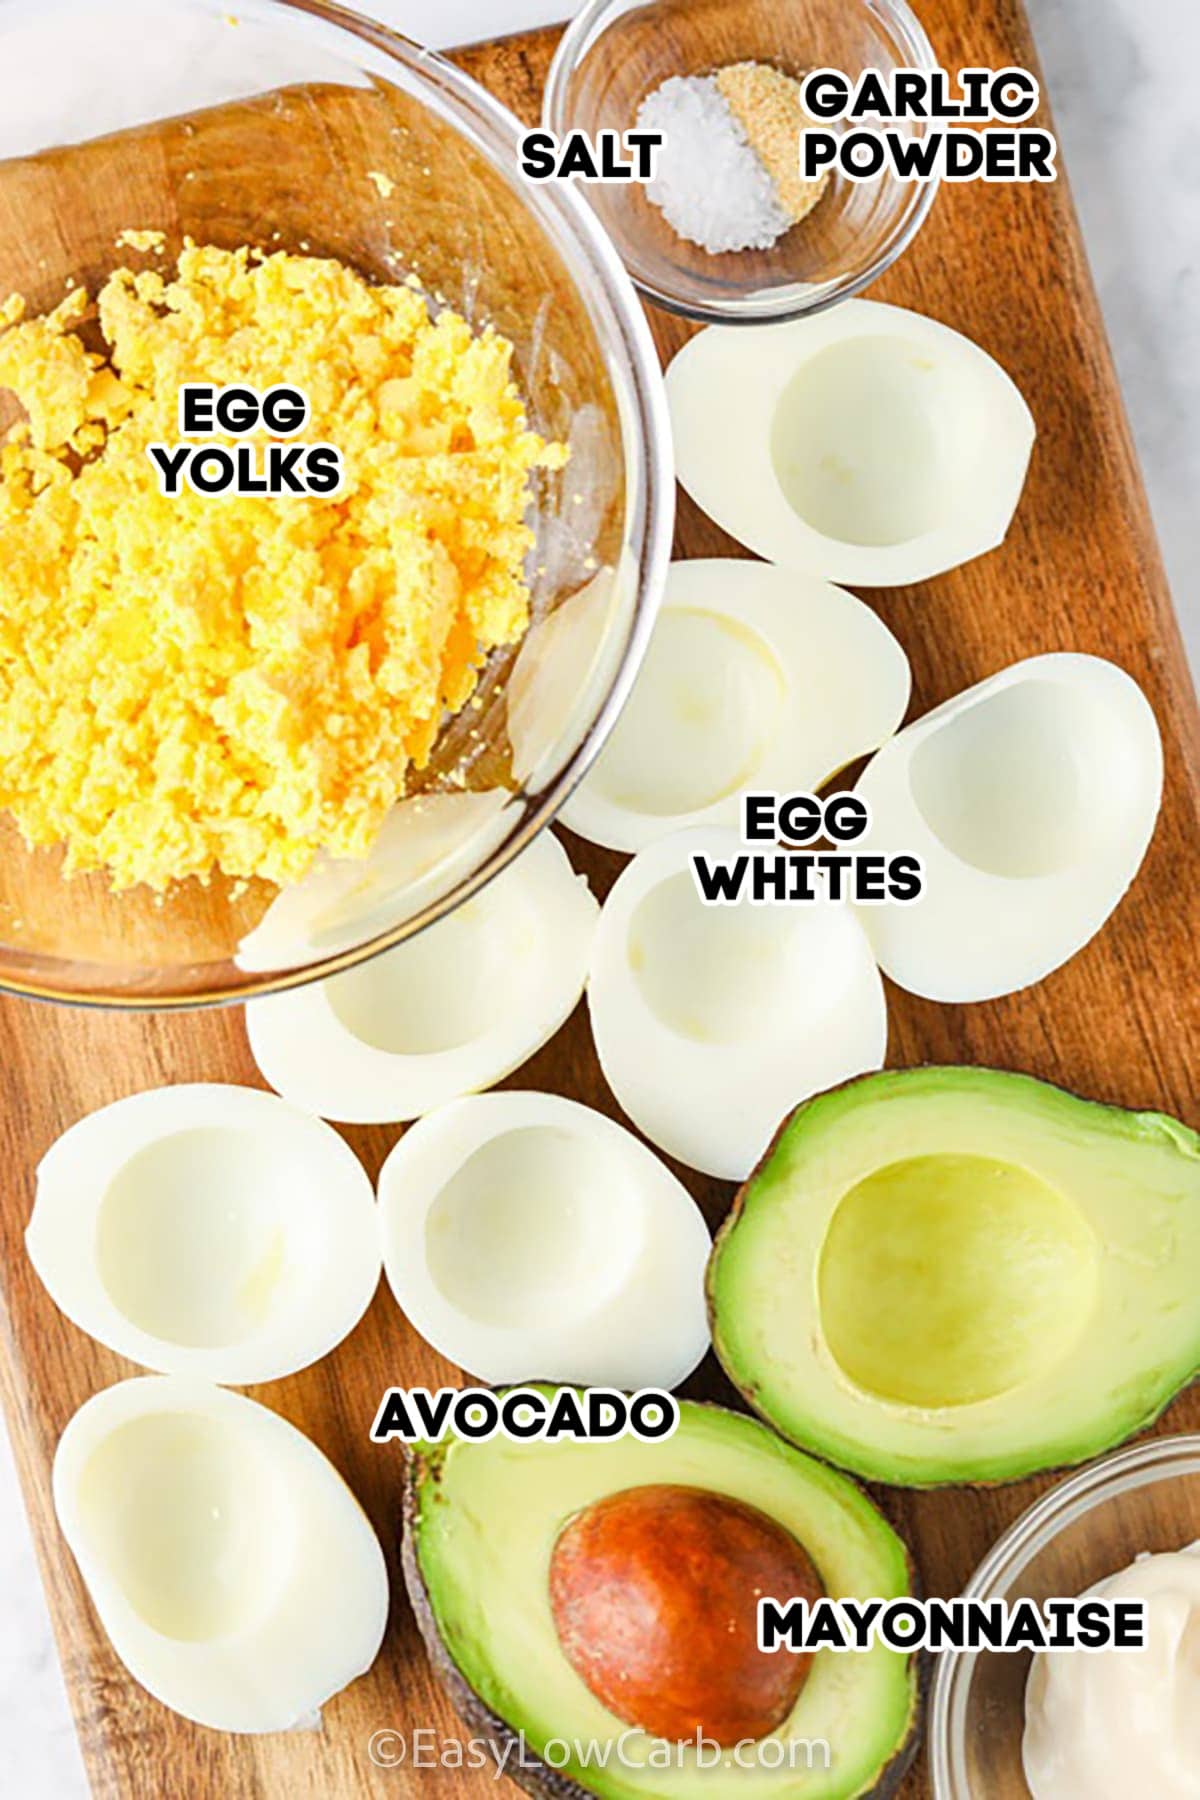 egg yolks, egg whites, avocado, mayonnaise, salt and garlic powder on a wooden board to make avocado deviled eggs